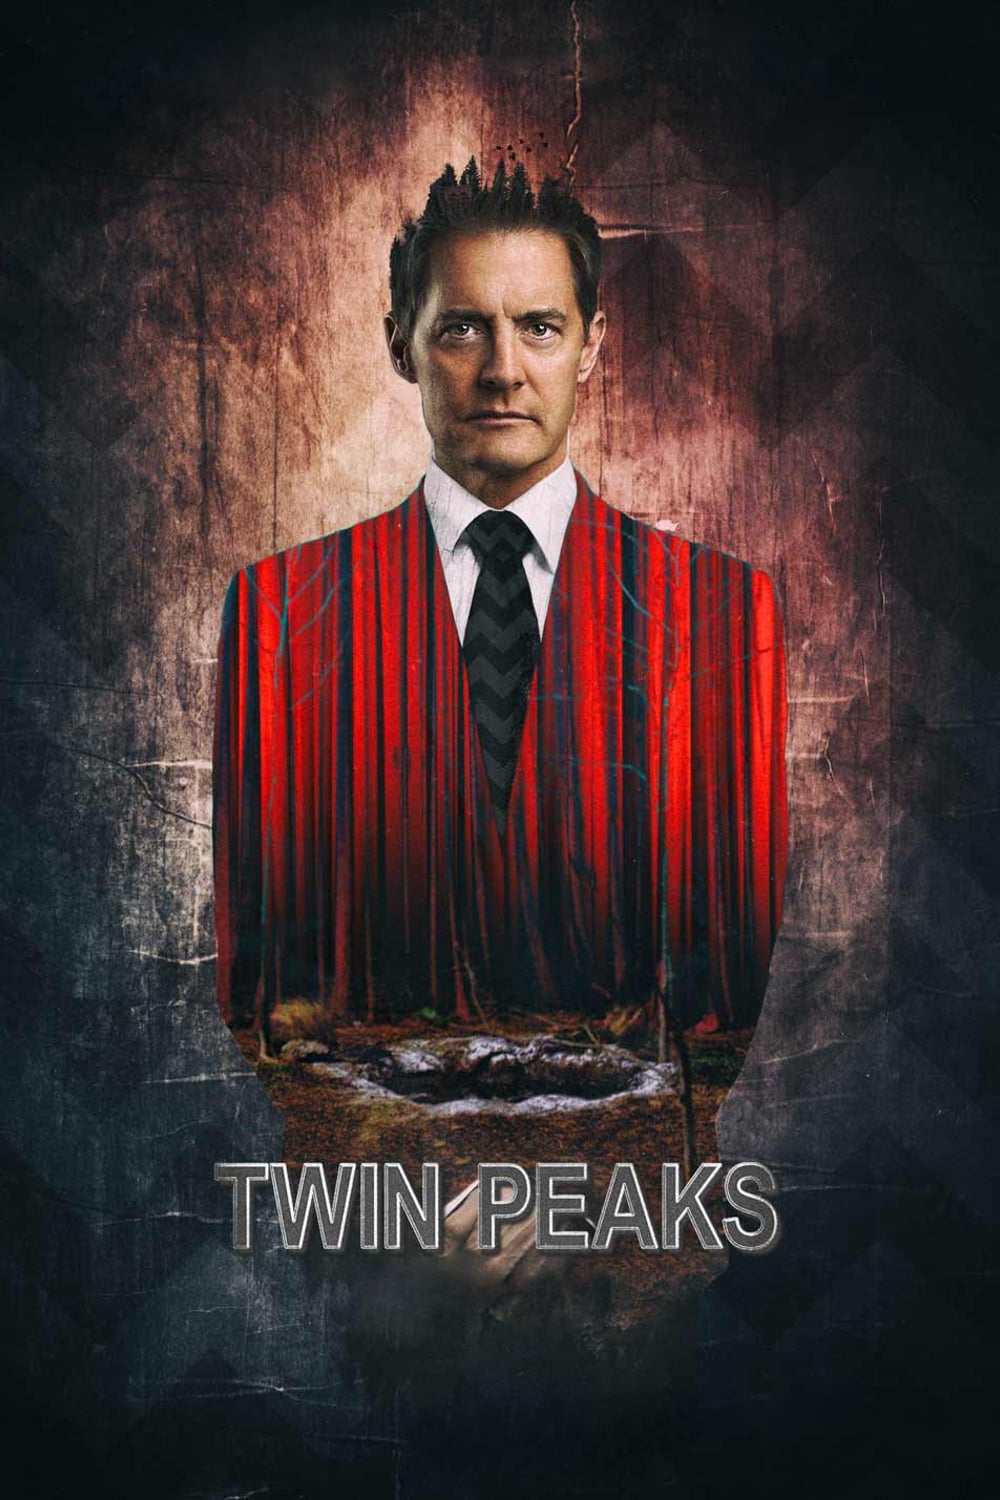 Twin Peaks rating